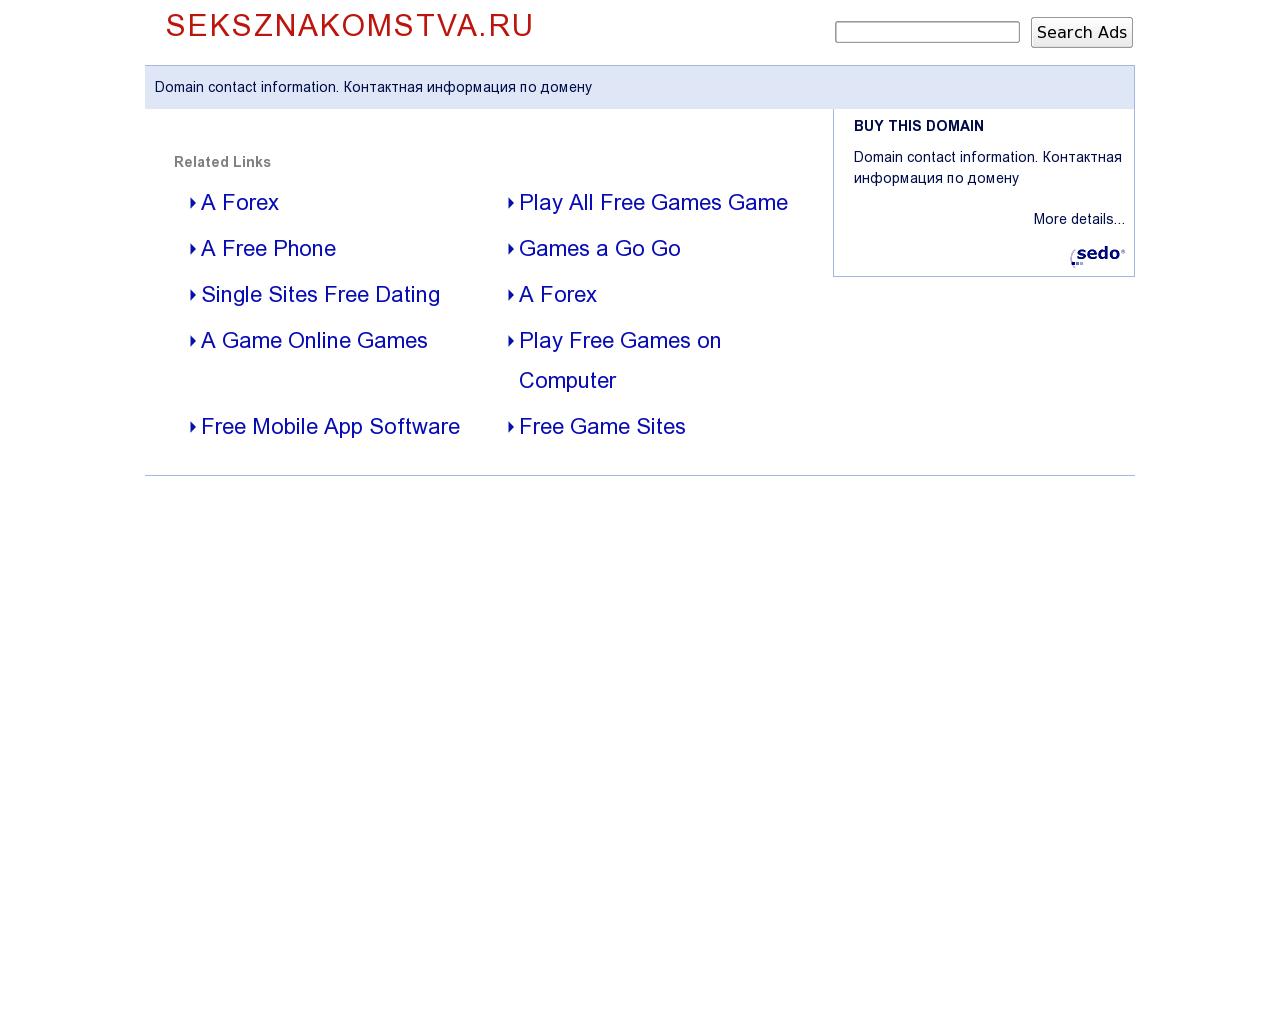 Изображение сайта seksznakomstva.ru в разрешении 1280x1024